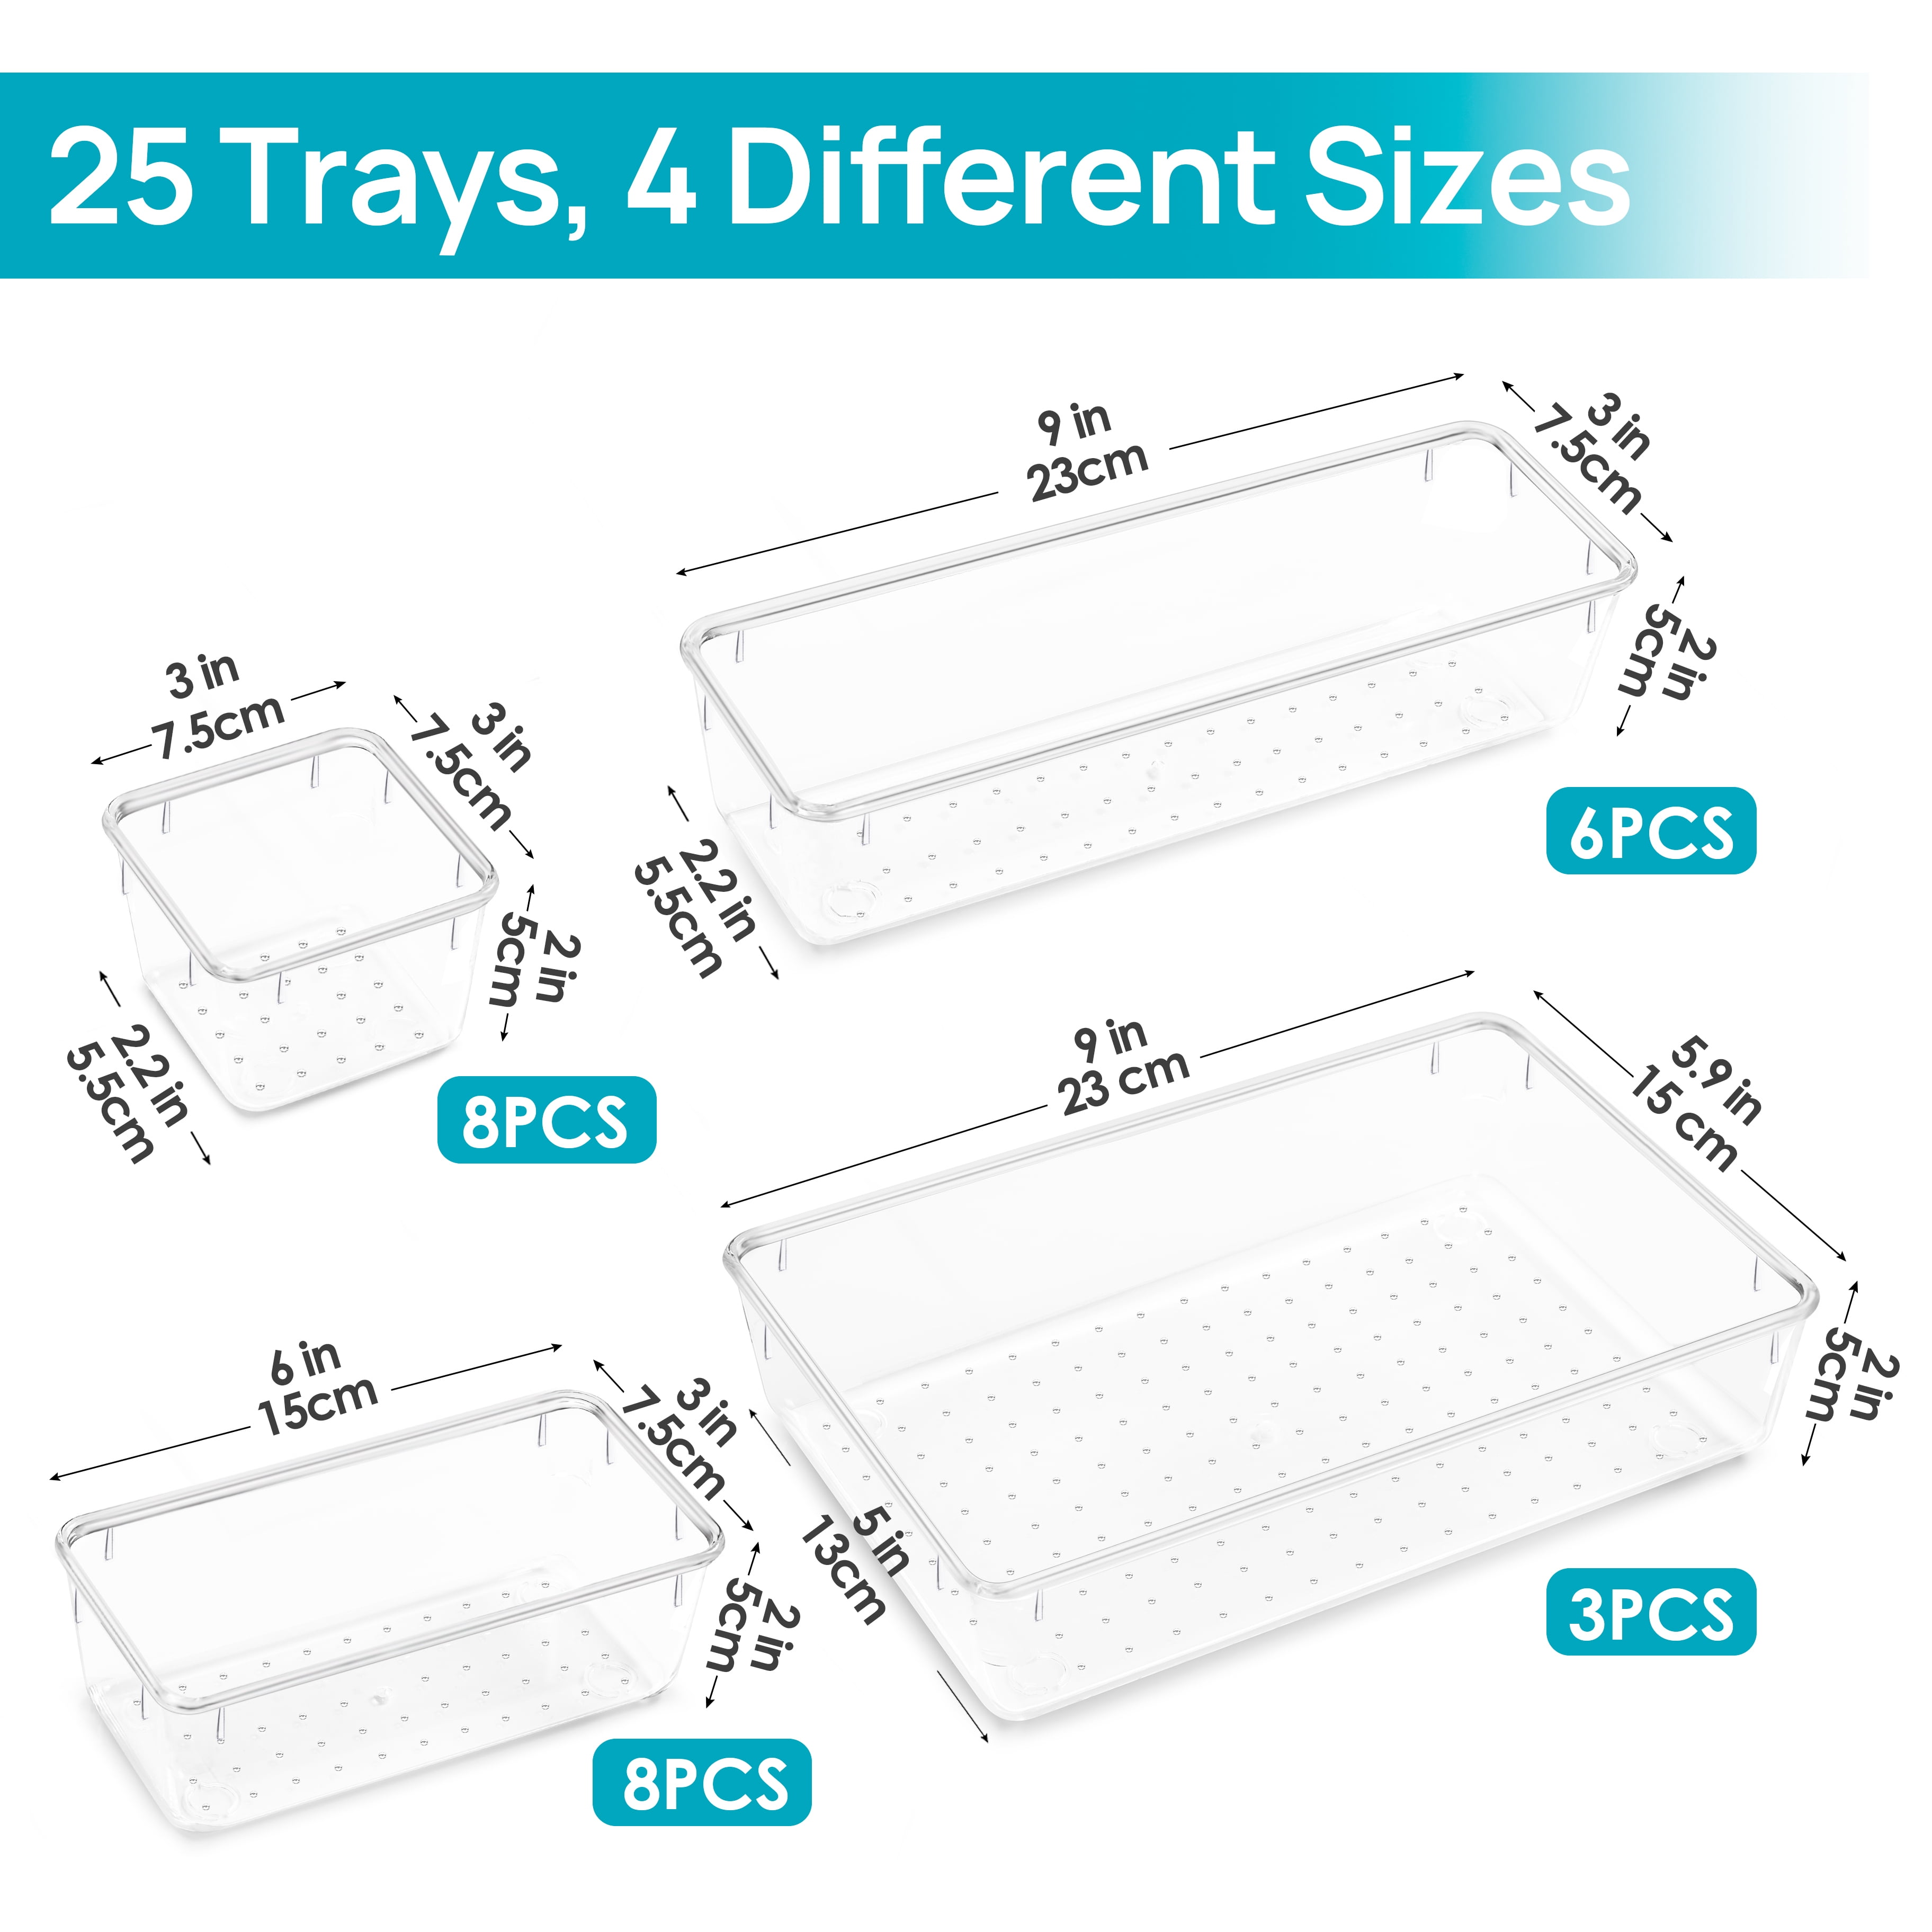 Cq acrylic cq acrylic 25 pcs clear plastic drawer organizers set,4